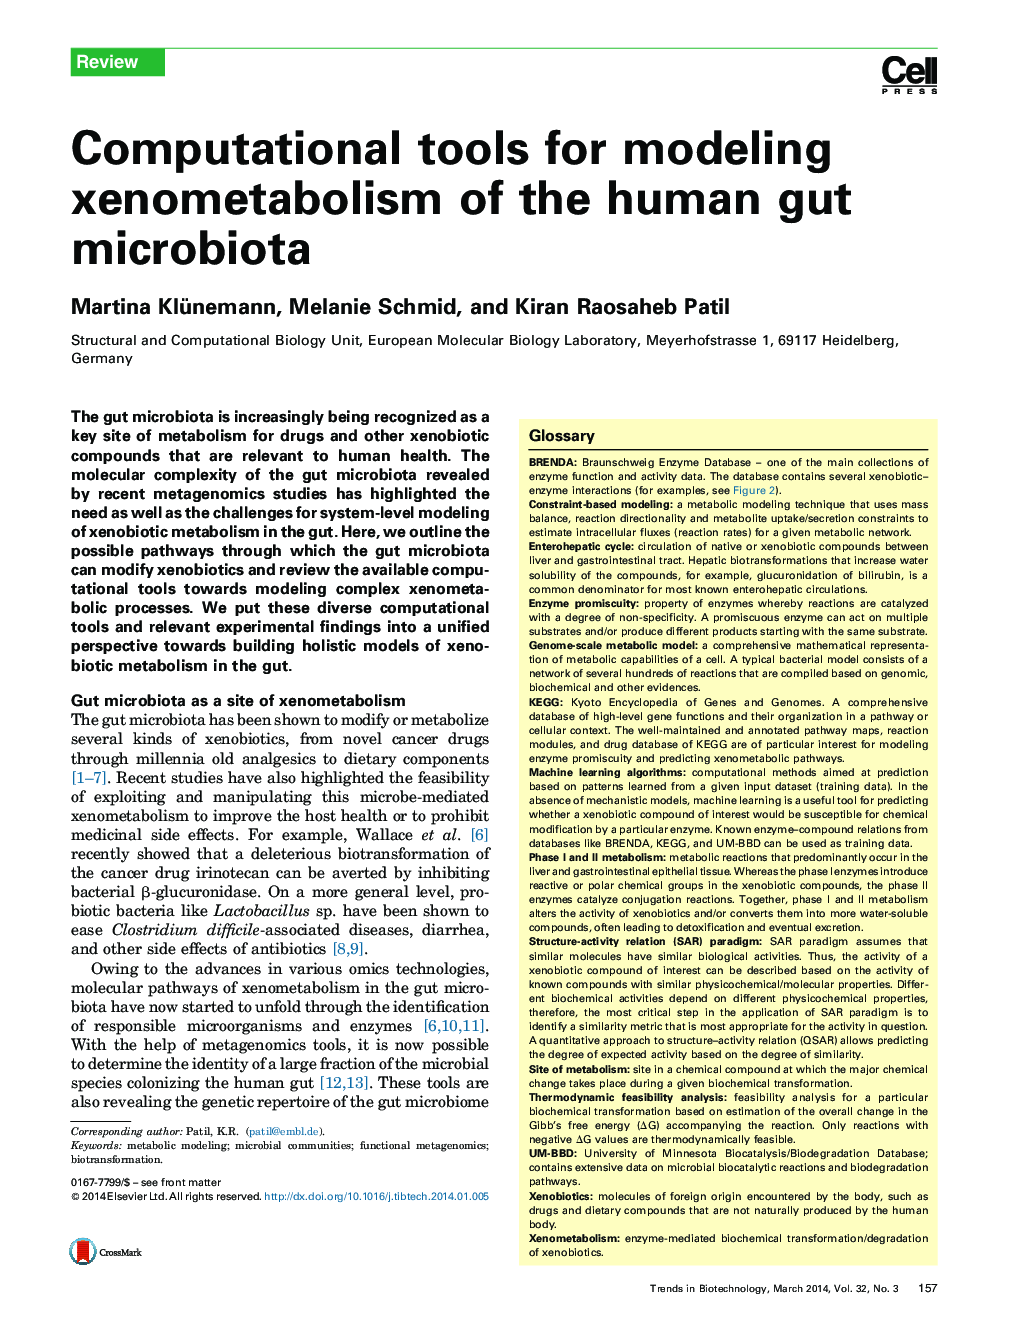 Computational tools for modeling xenometabolism of the human gut microbiota